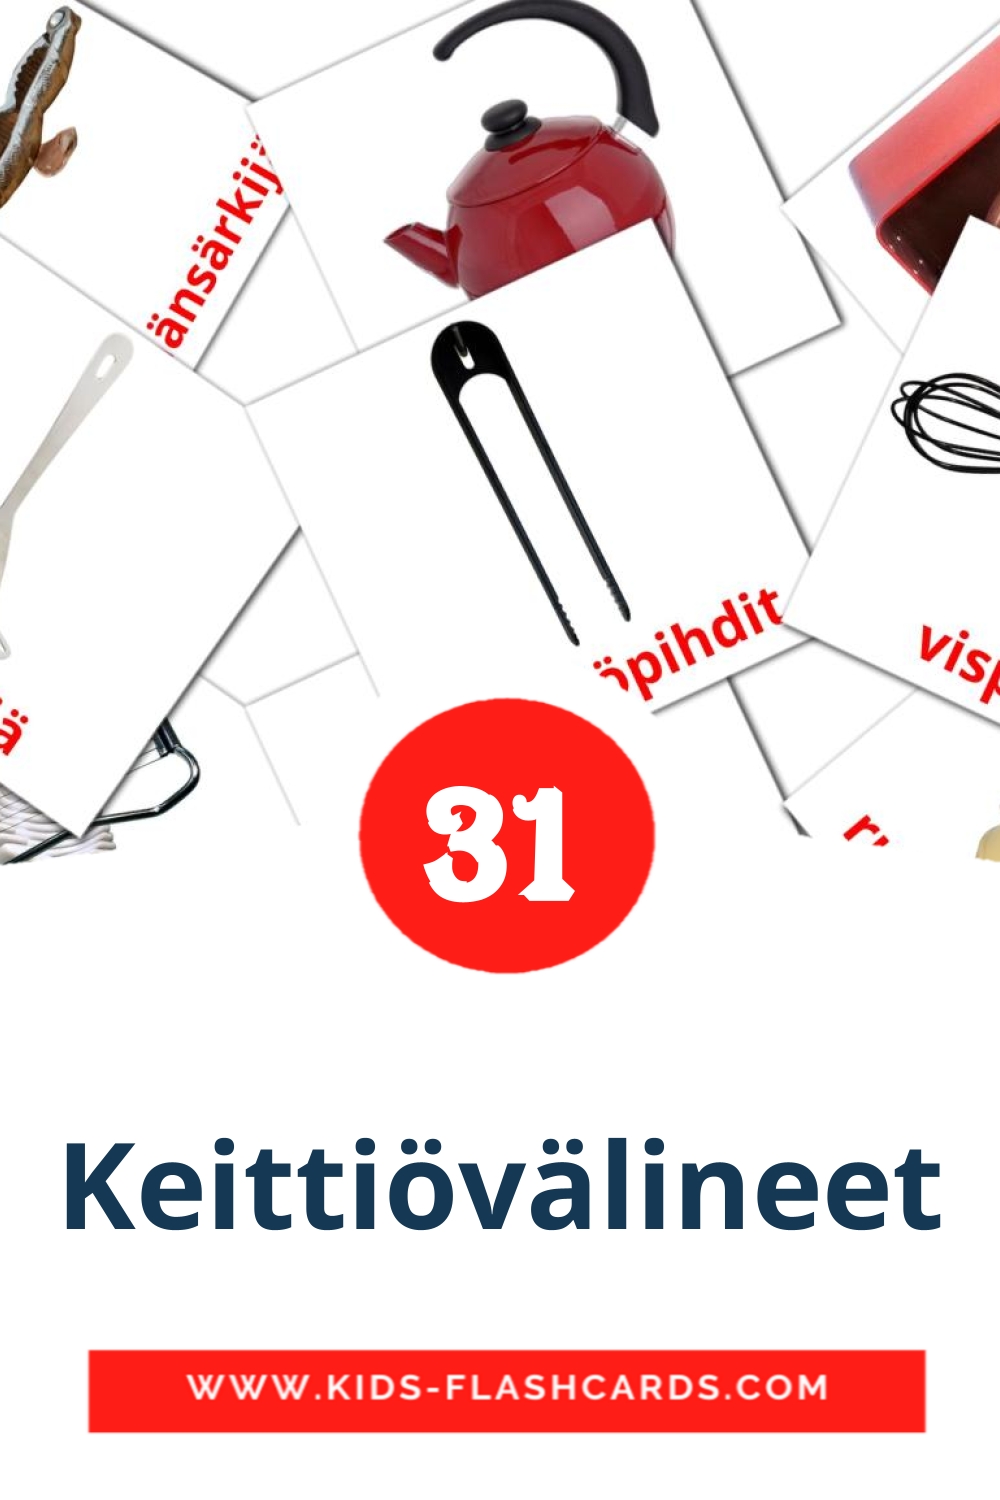 31 Cartões com Imagens de Keittiövälineet para Jardim de Infância em finlandês